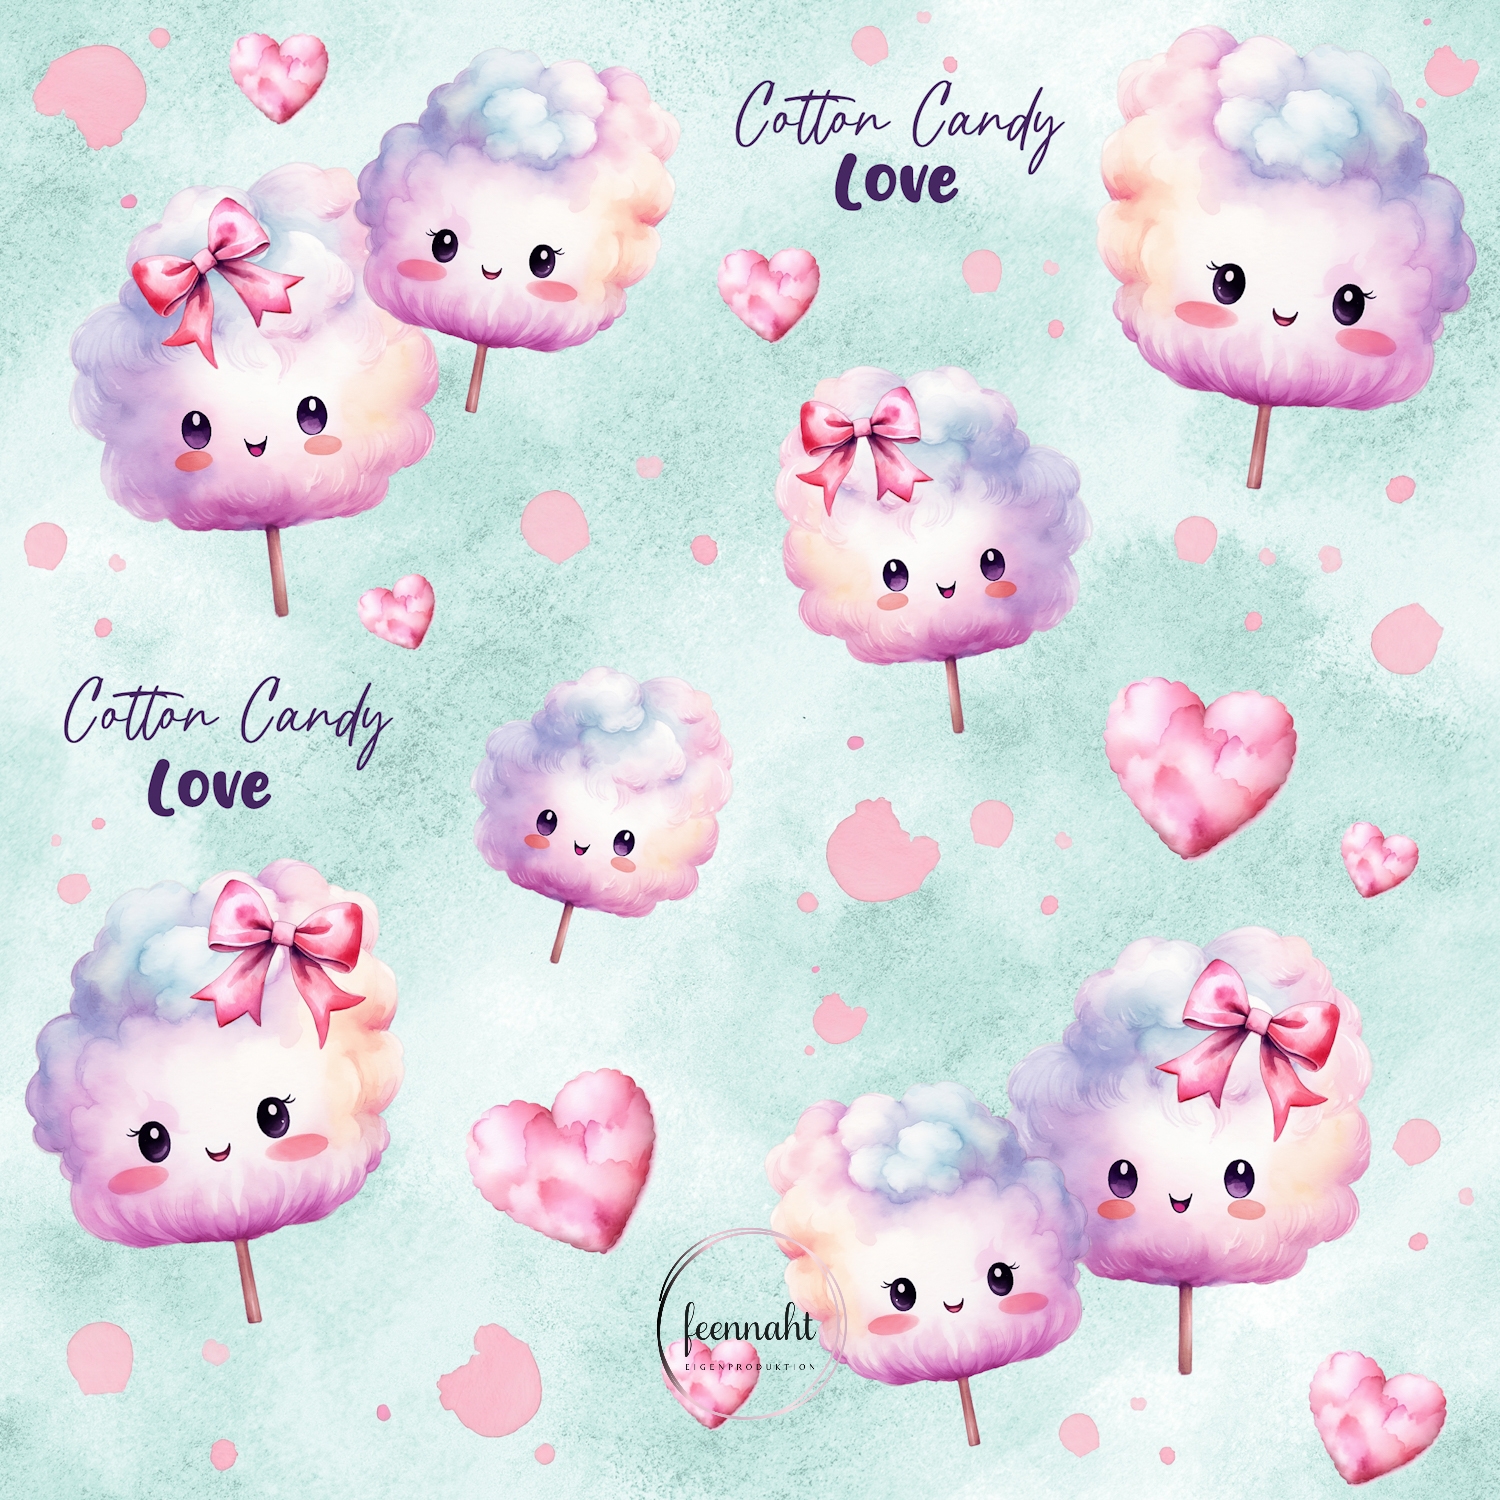 Vorbestellung - Jersey o. French Terry / 24,00 EUR/m - Eigenproduktion - cotton candy love